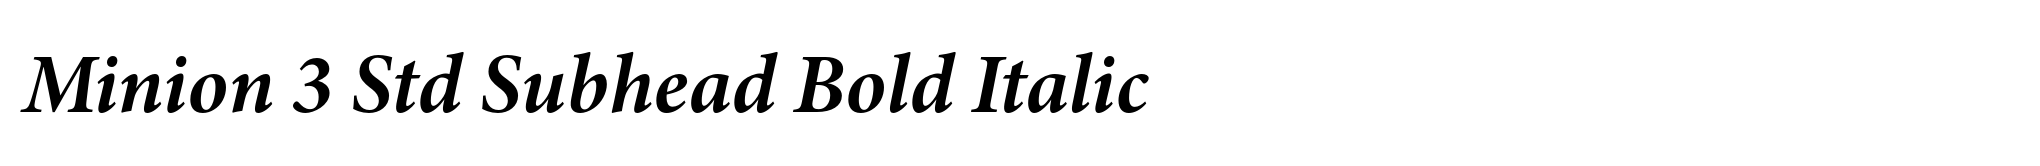 Minion 3 Std Subhead Bold Italic image